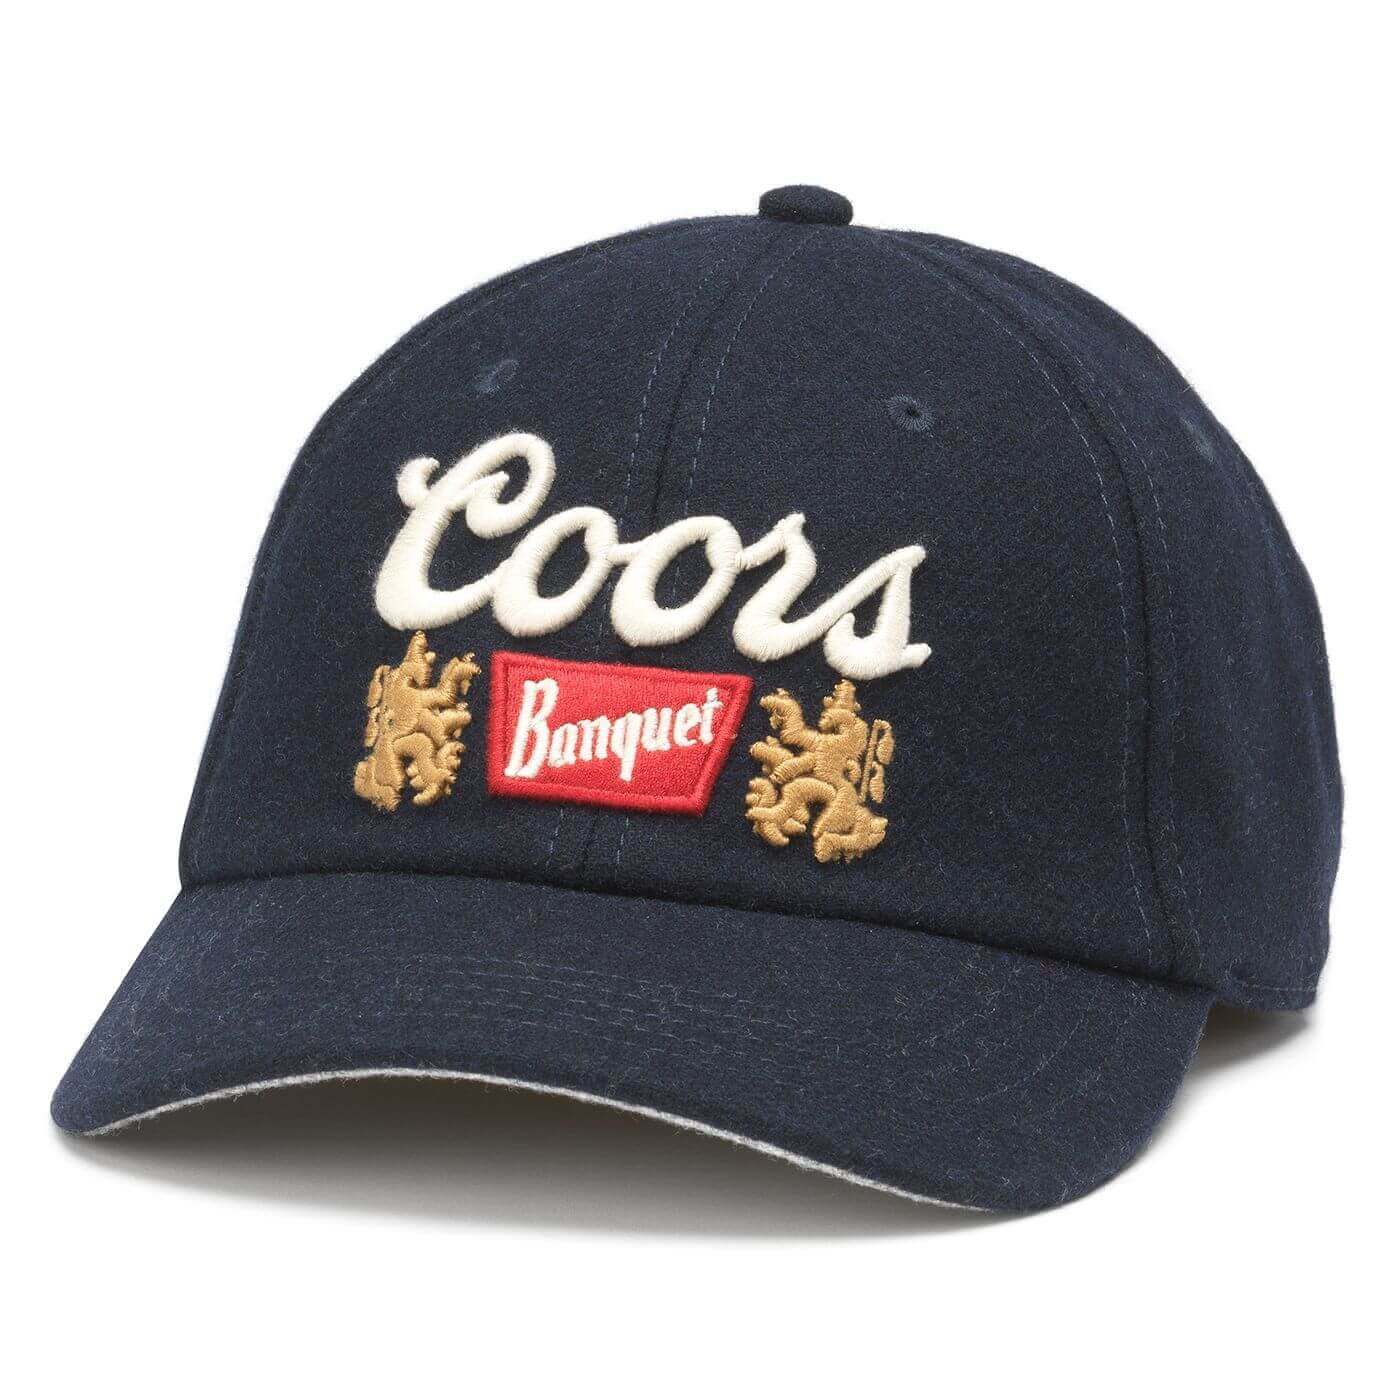 Coors Banquet Hats: Dark Blue Strapback Dad Hat | Beer Brands